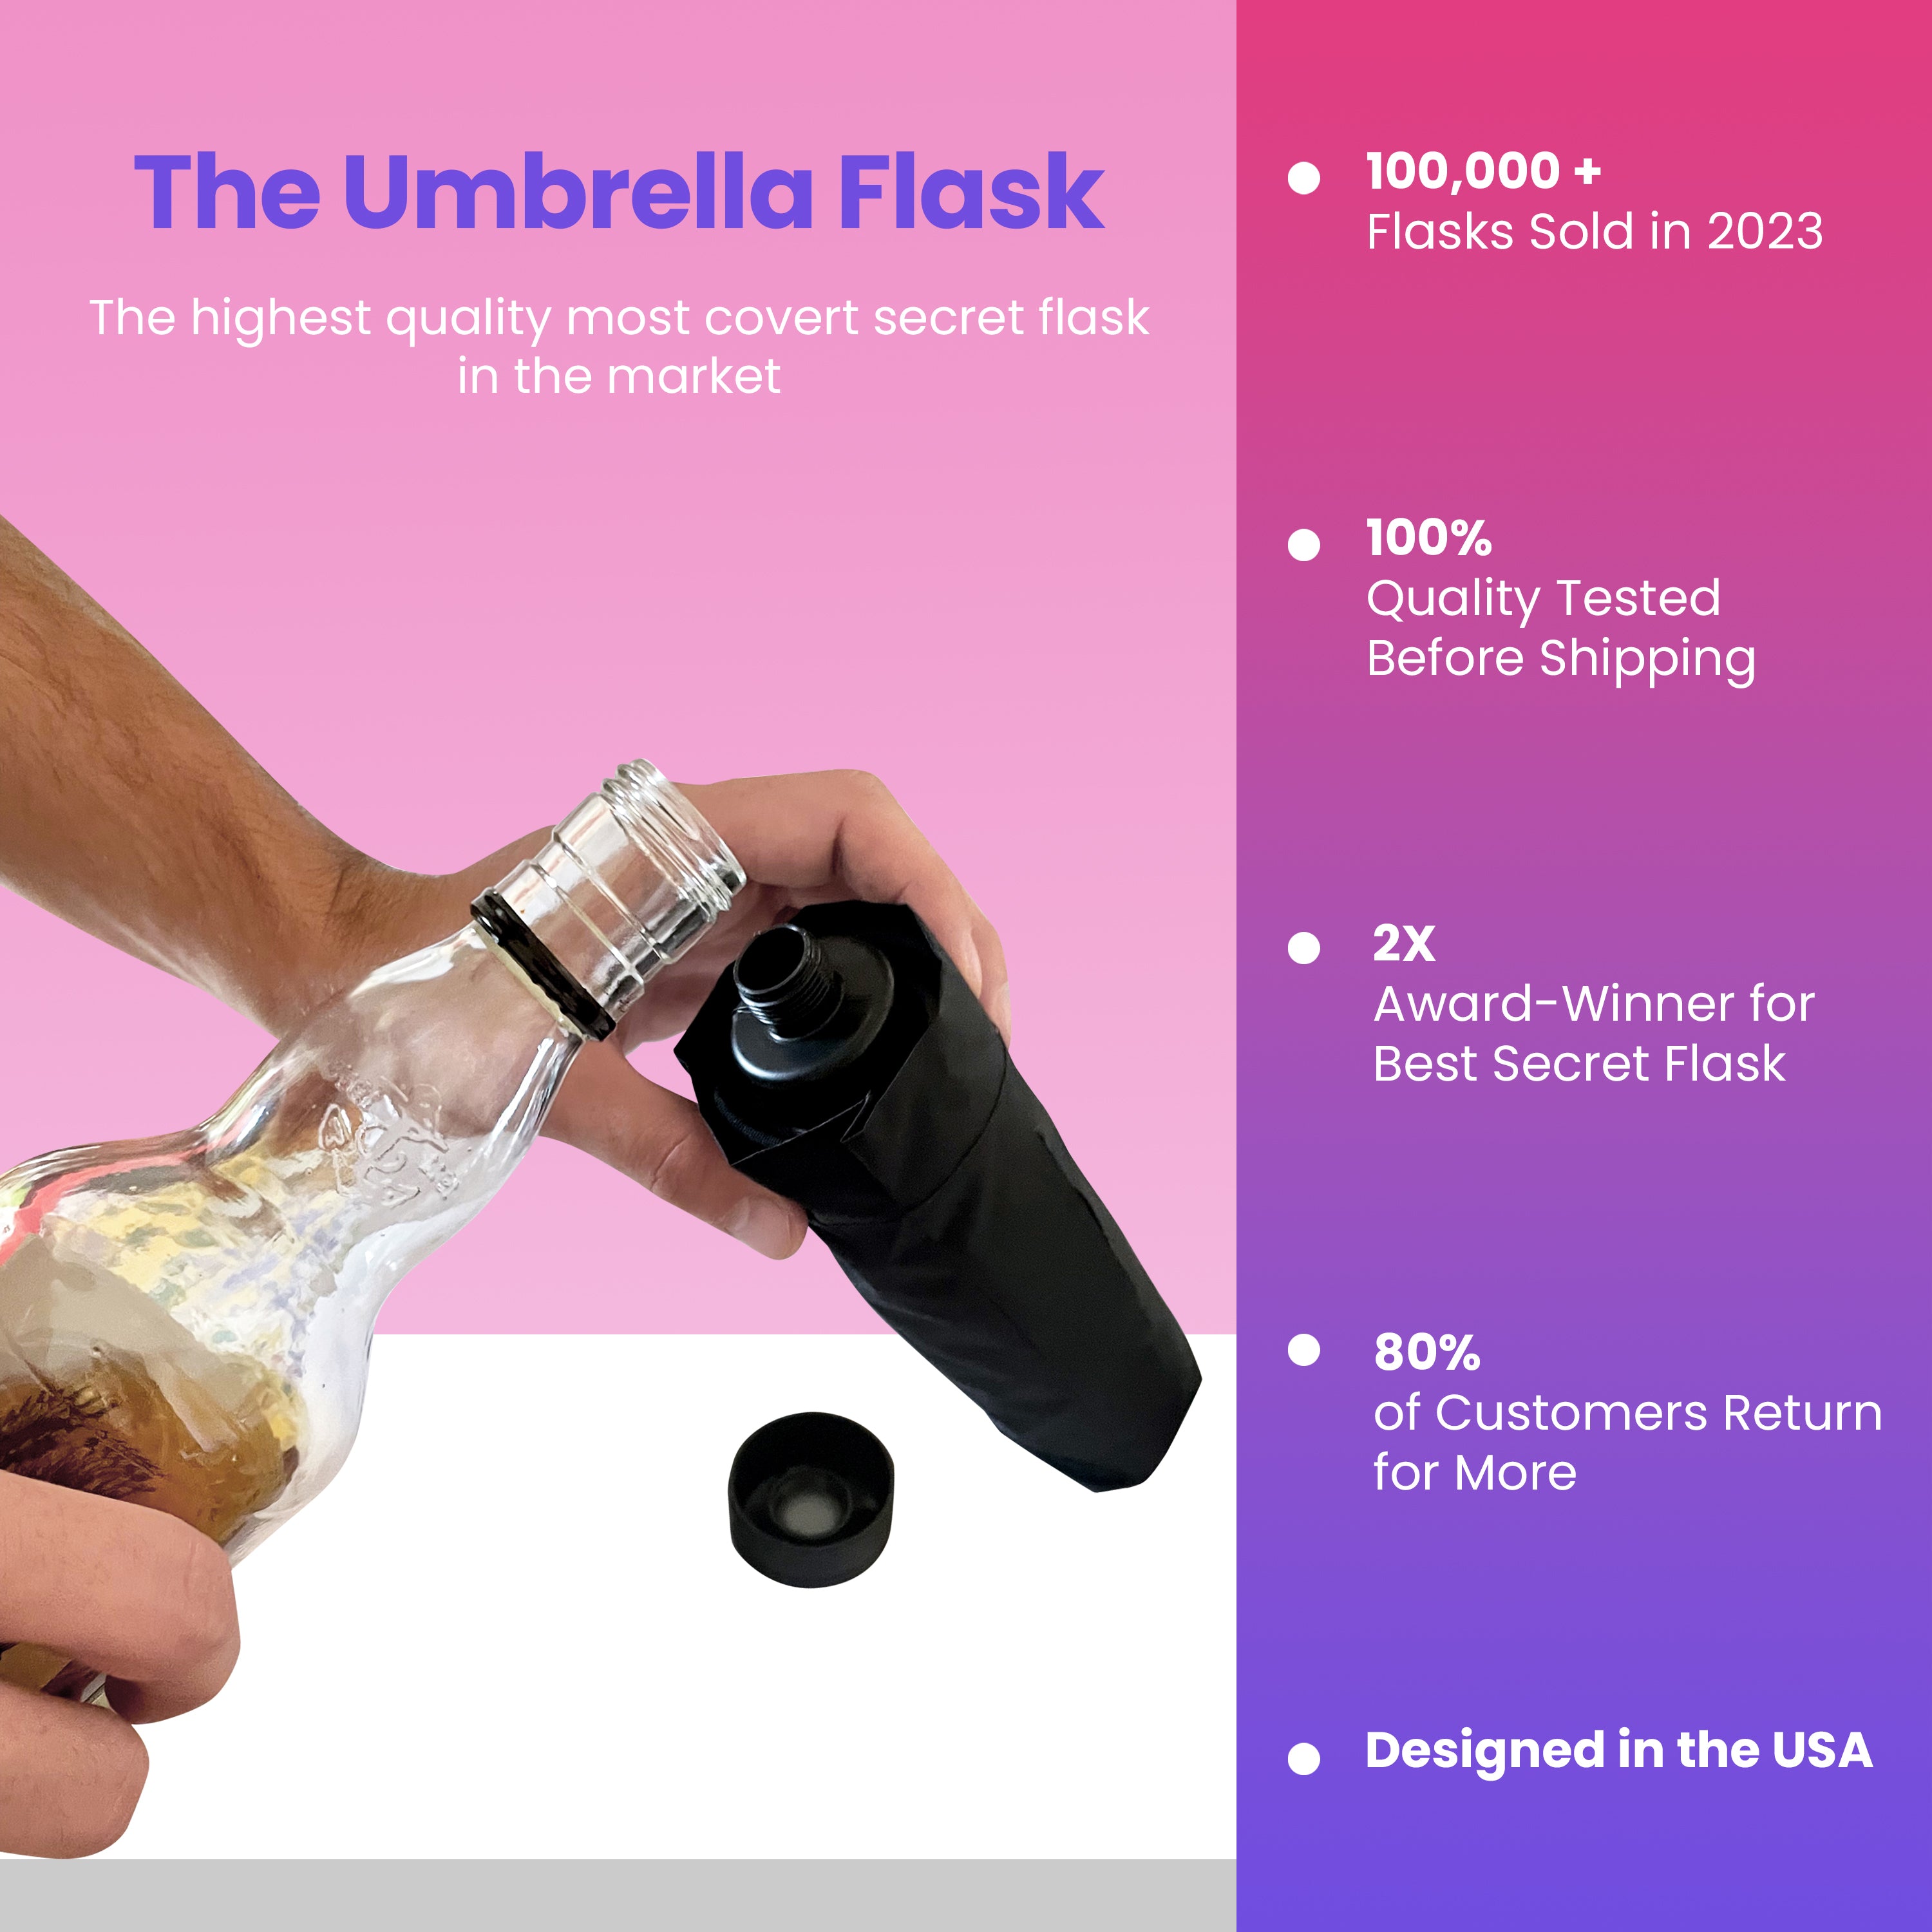 Umbrella flask highlights 